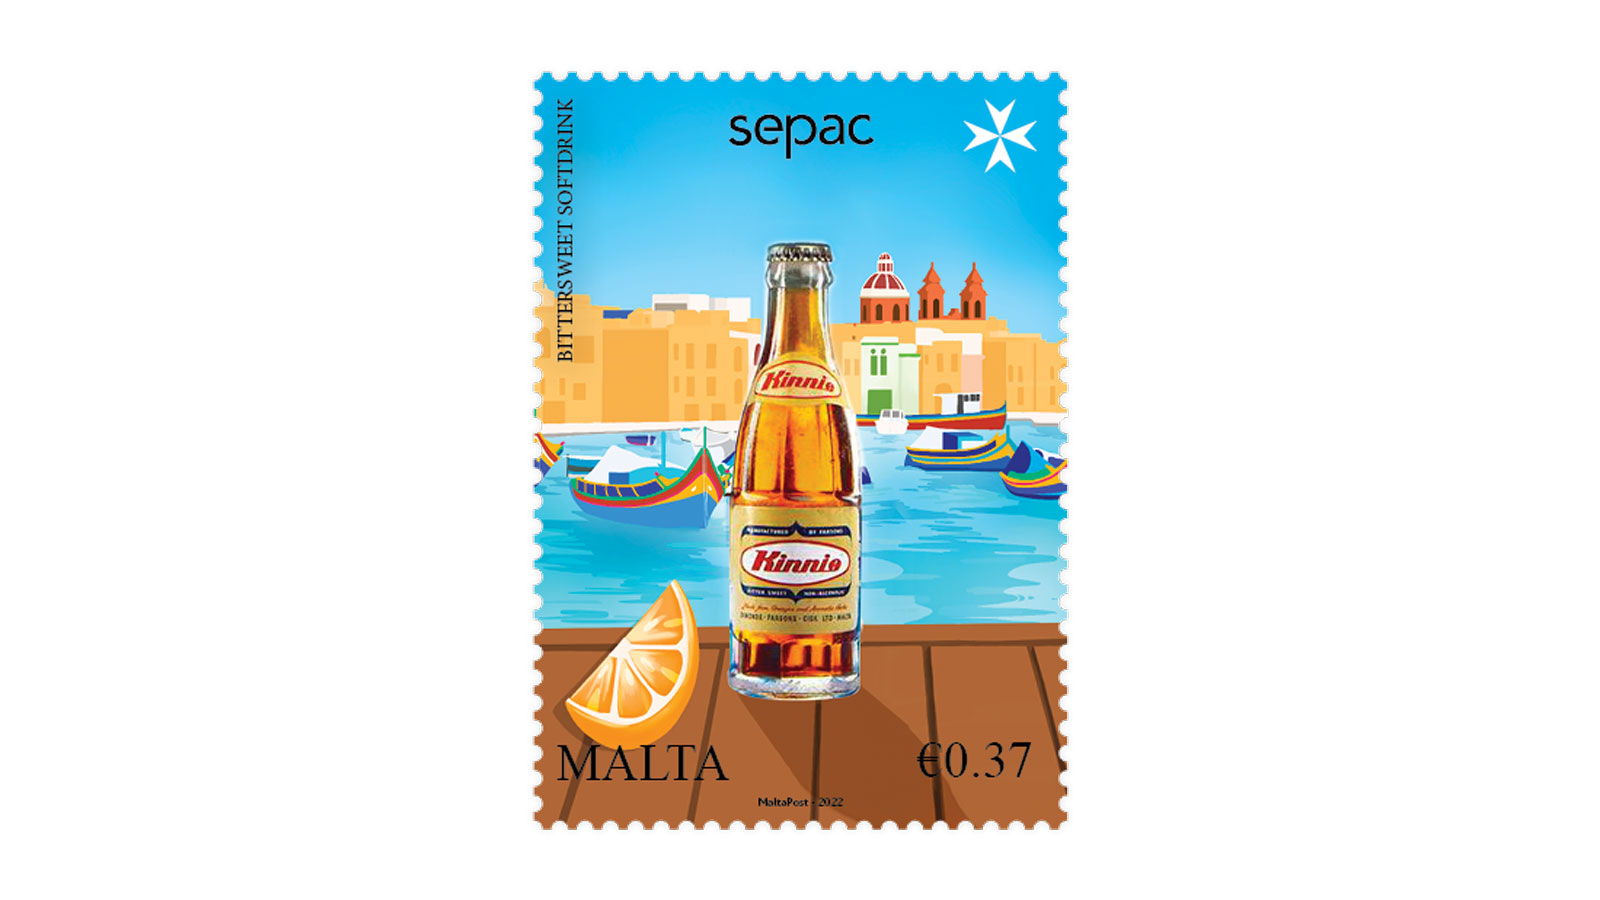 Kinnie featured in Maltapost stamp issue